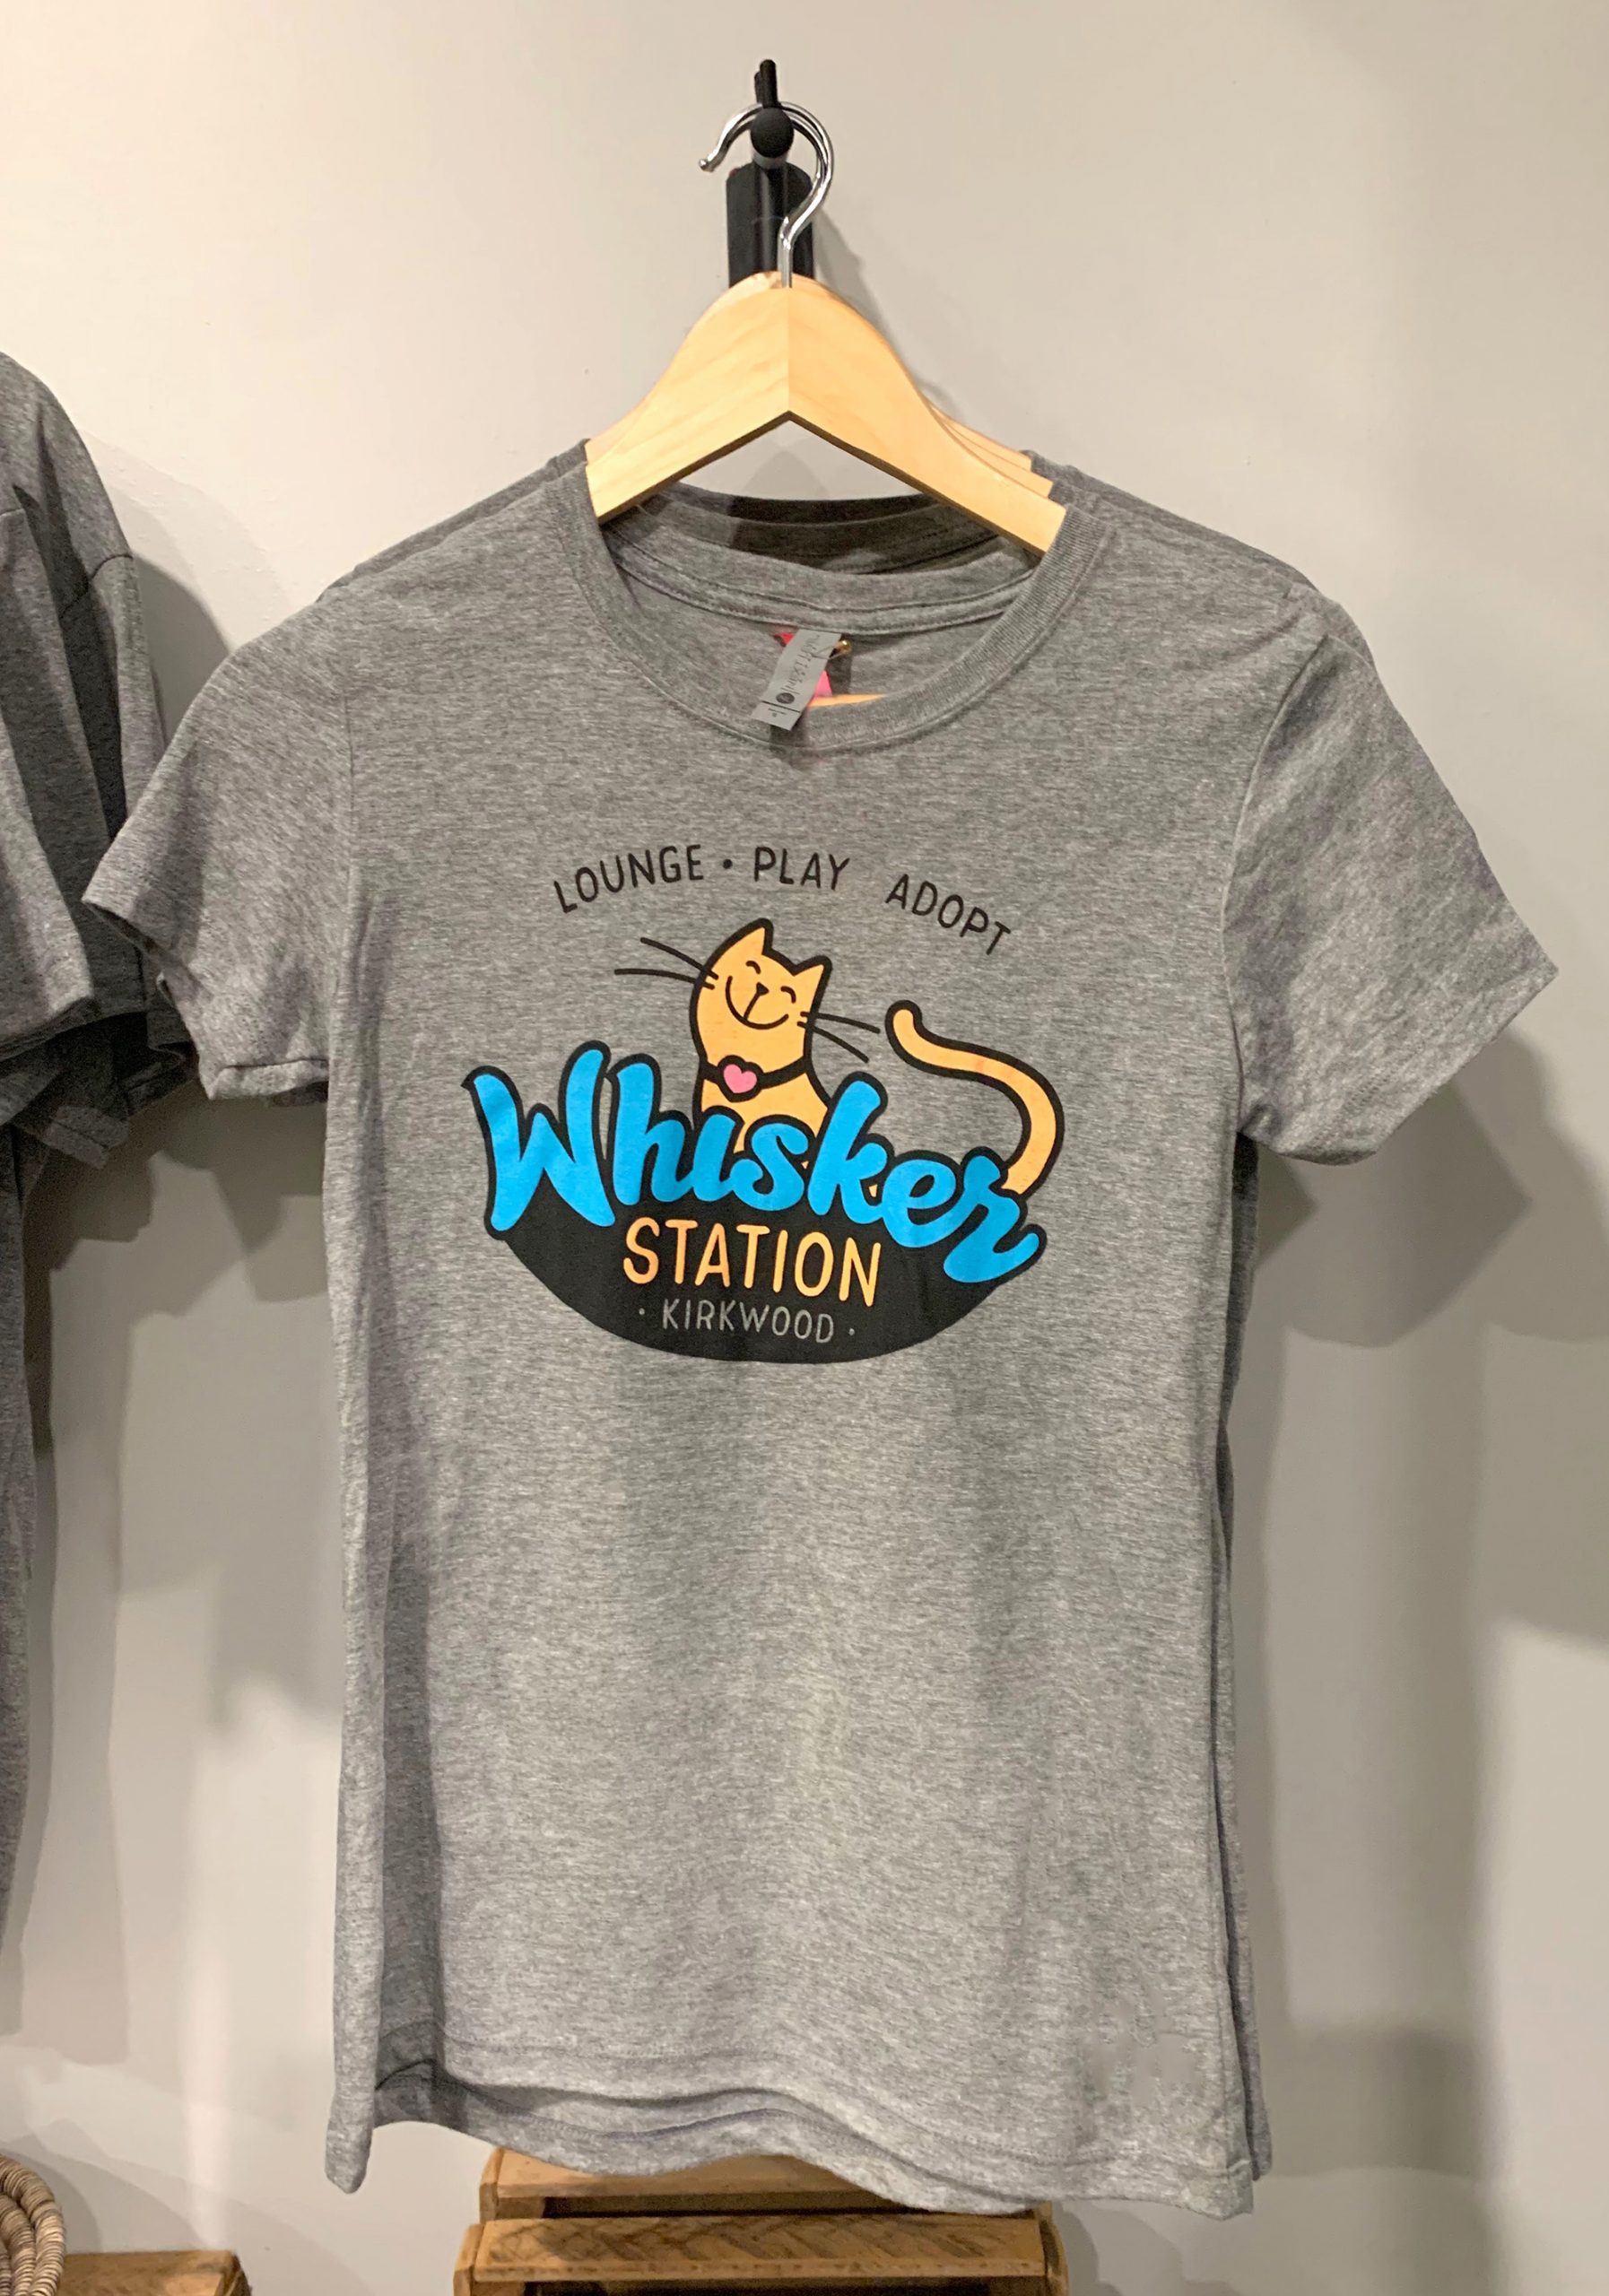 whisker station t-shirts